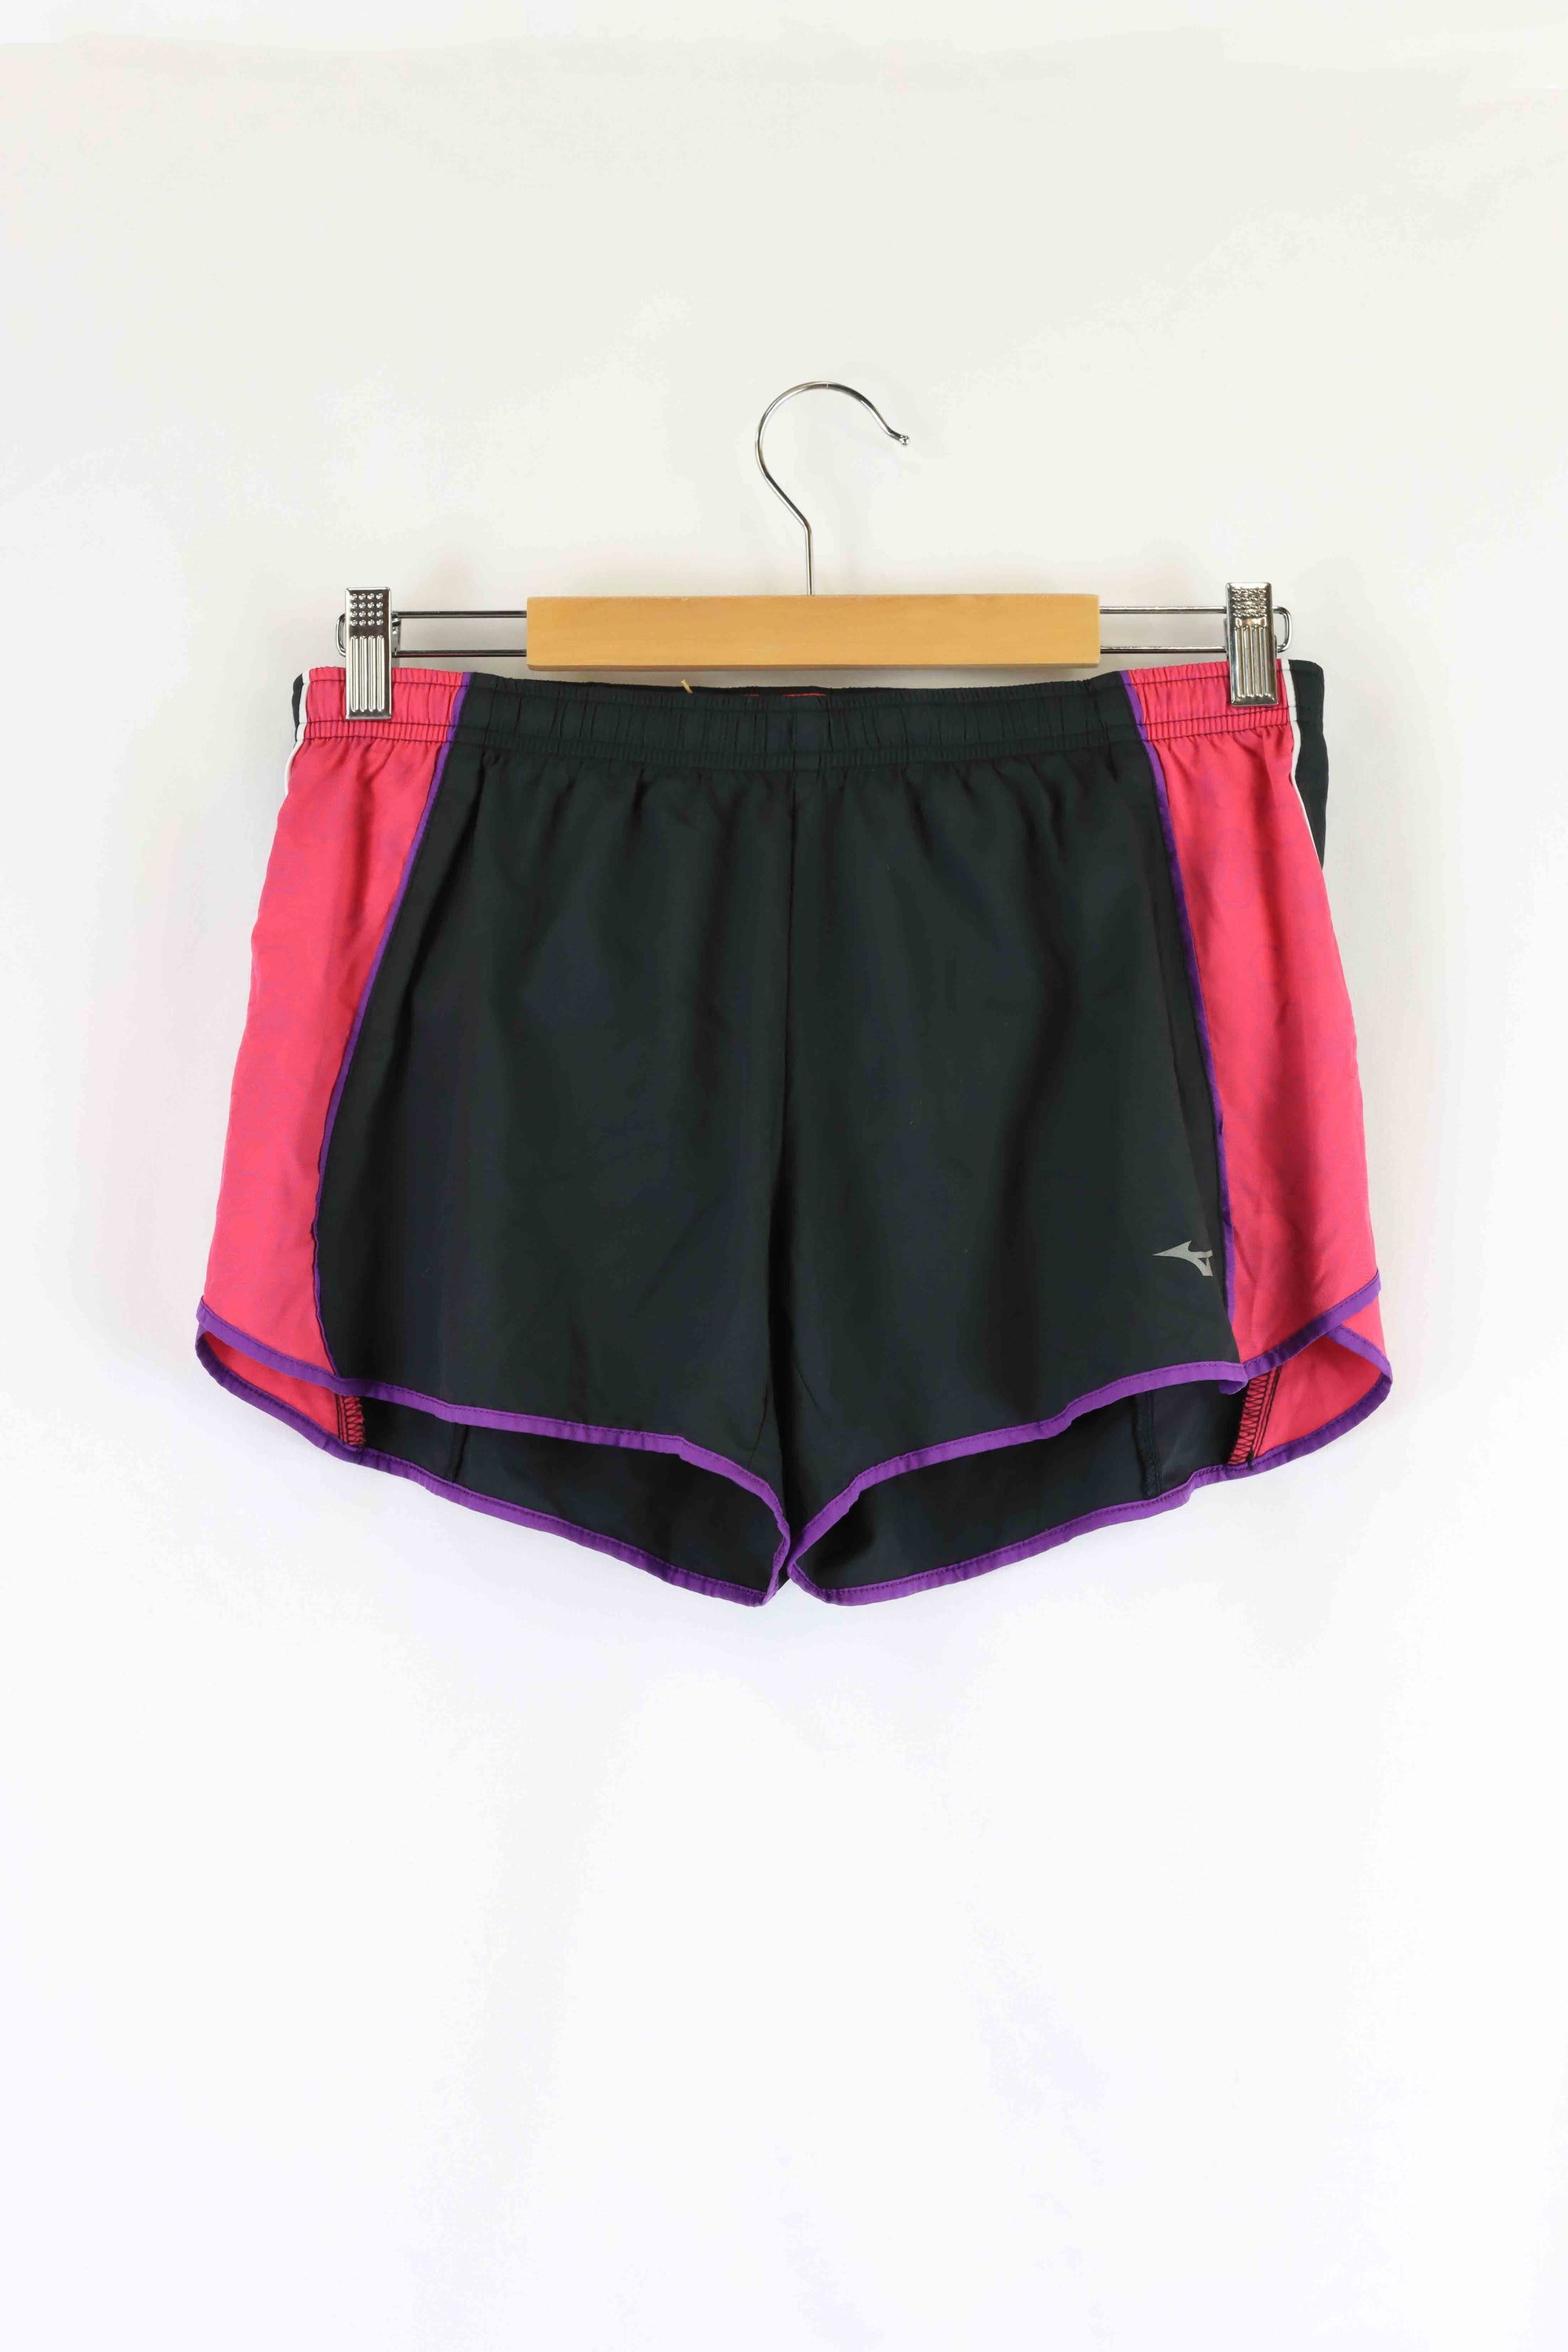 Ell & Voo Purple Shorts M - Reluv Clothing Australia